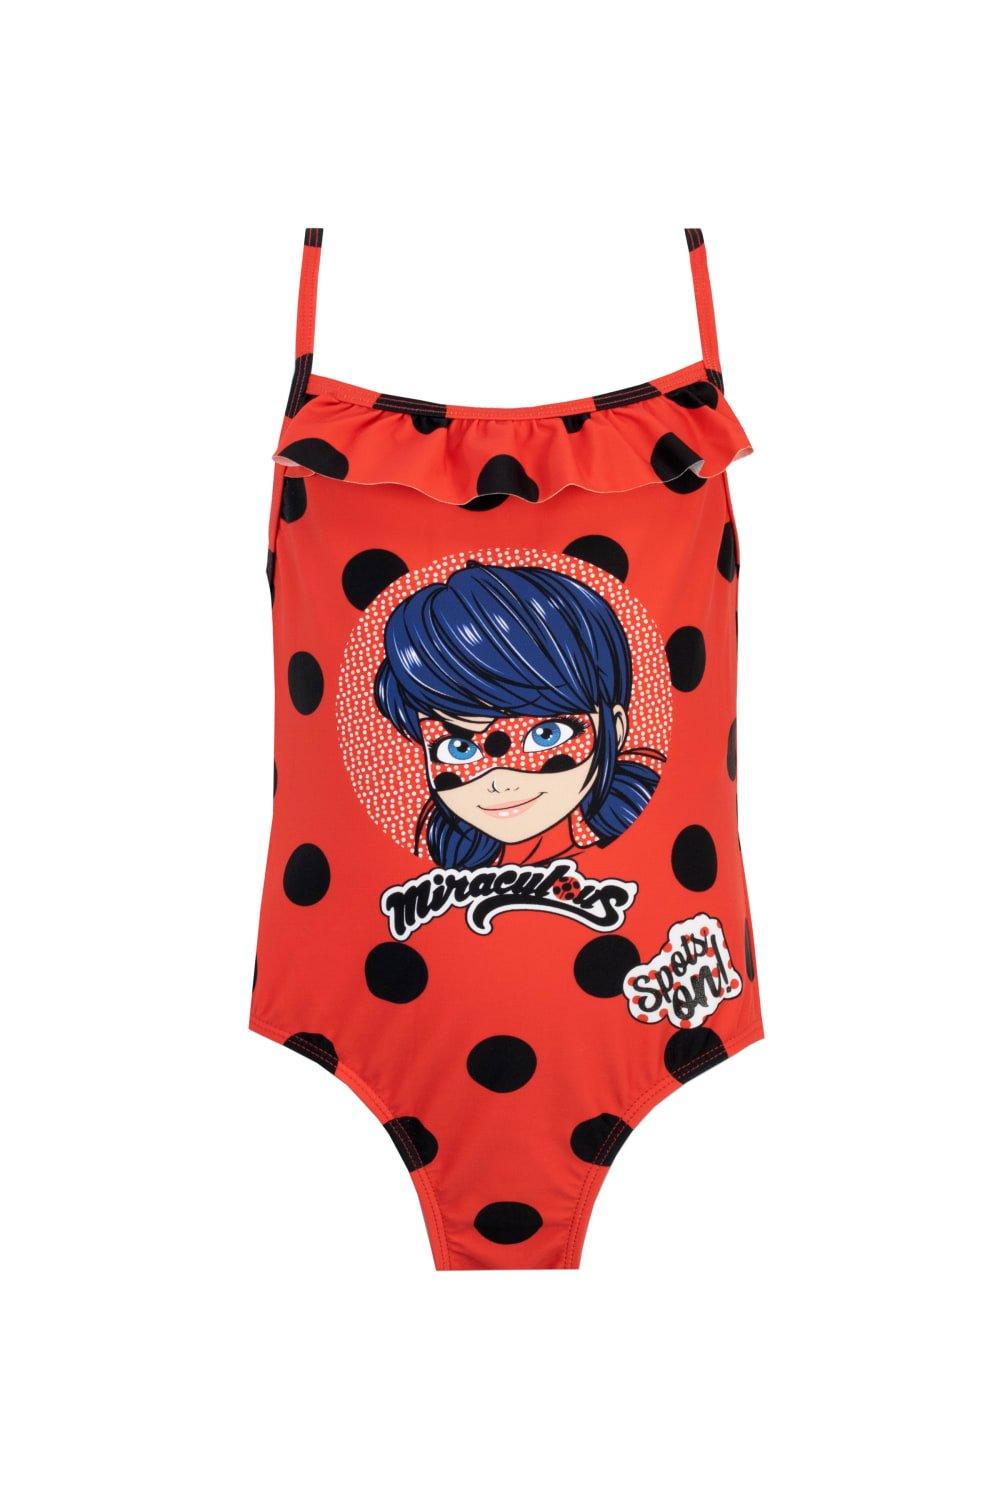 Ladybug Polka Dot Swimsuit